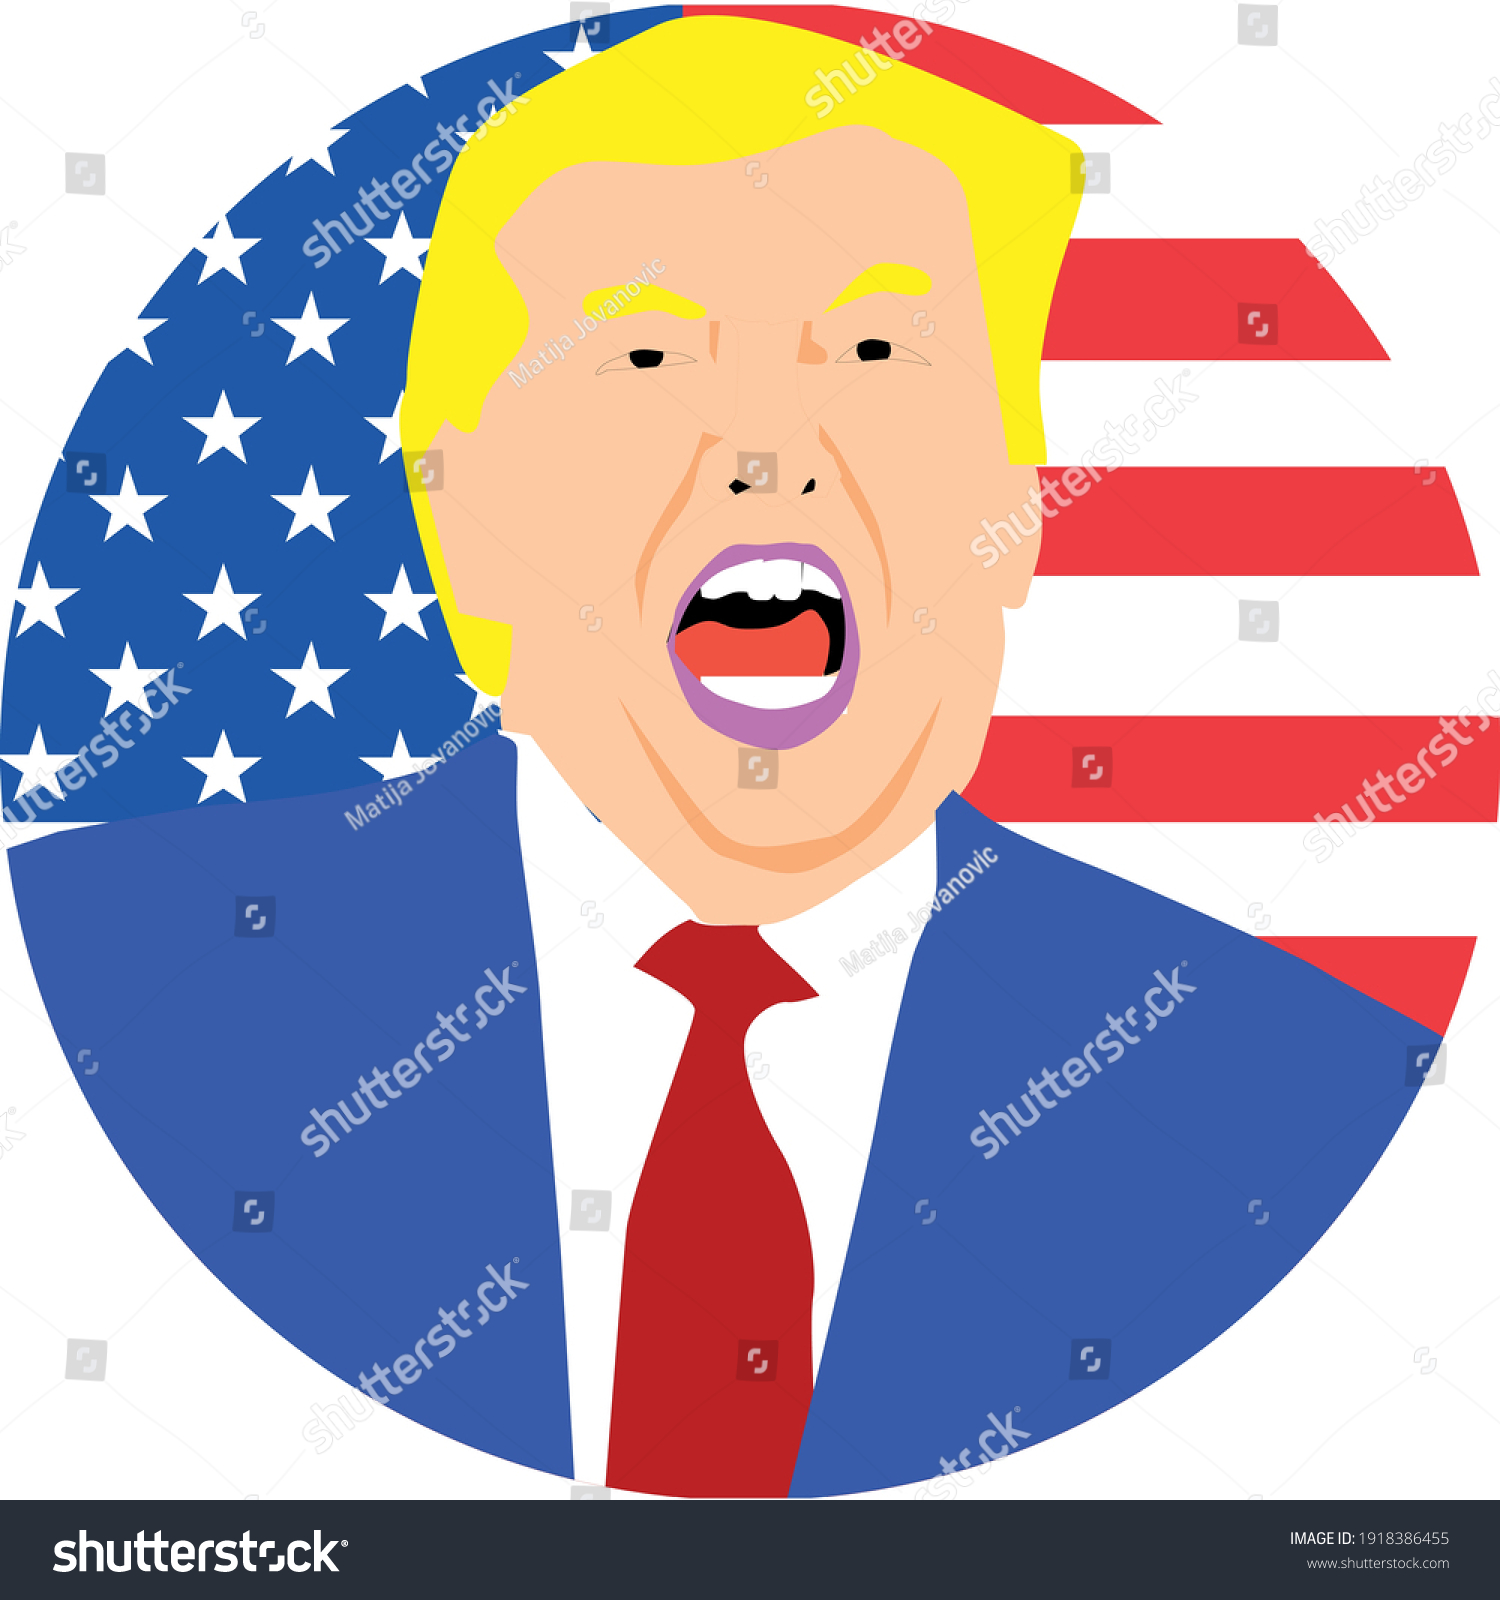 DONALD TRUMP HUGGING THE AMERICAN FLAG 16x20” PHOTO